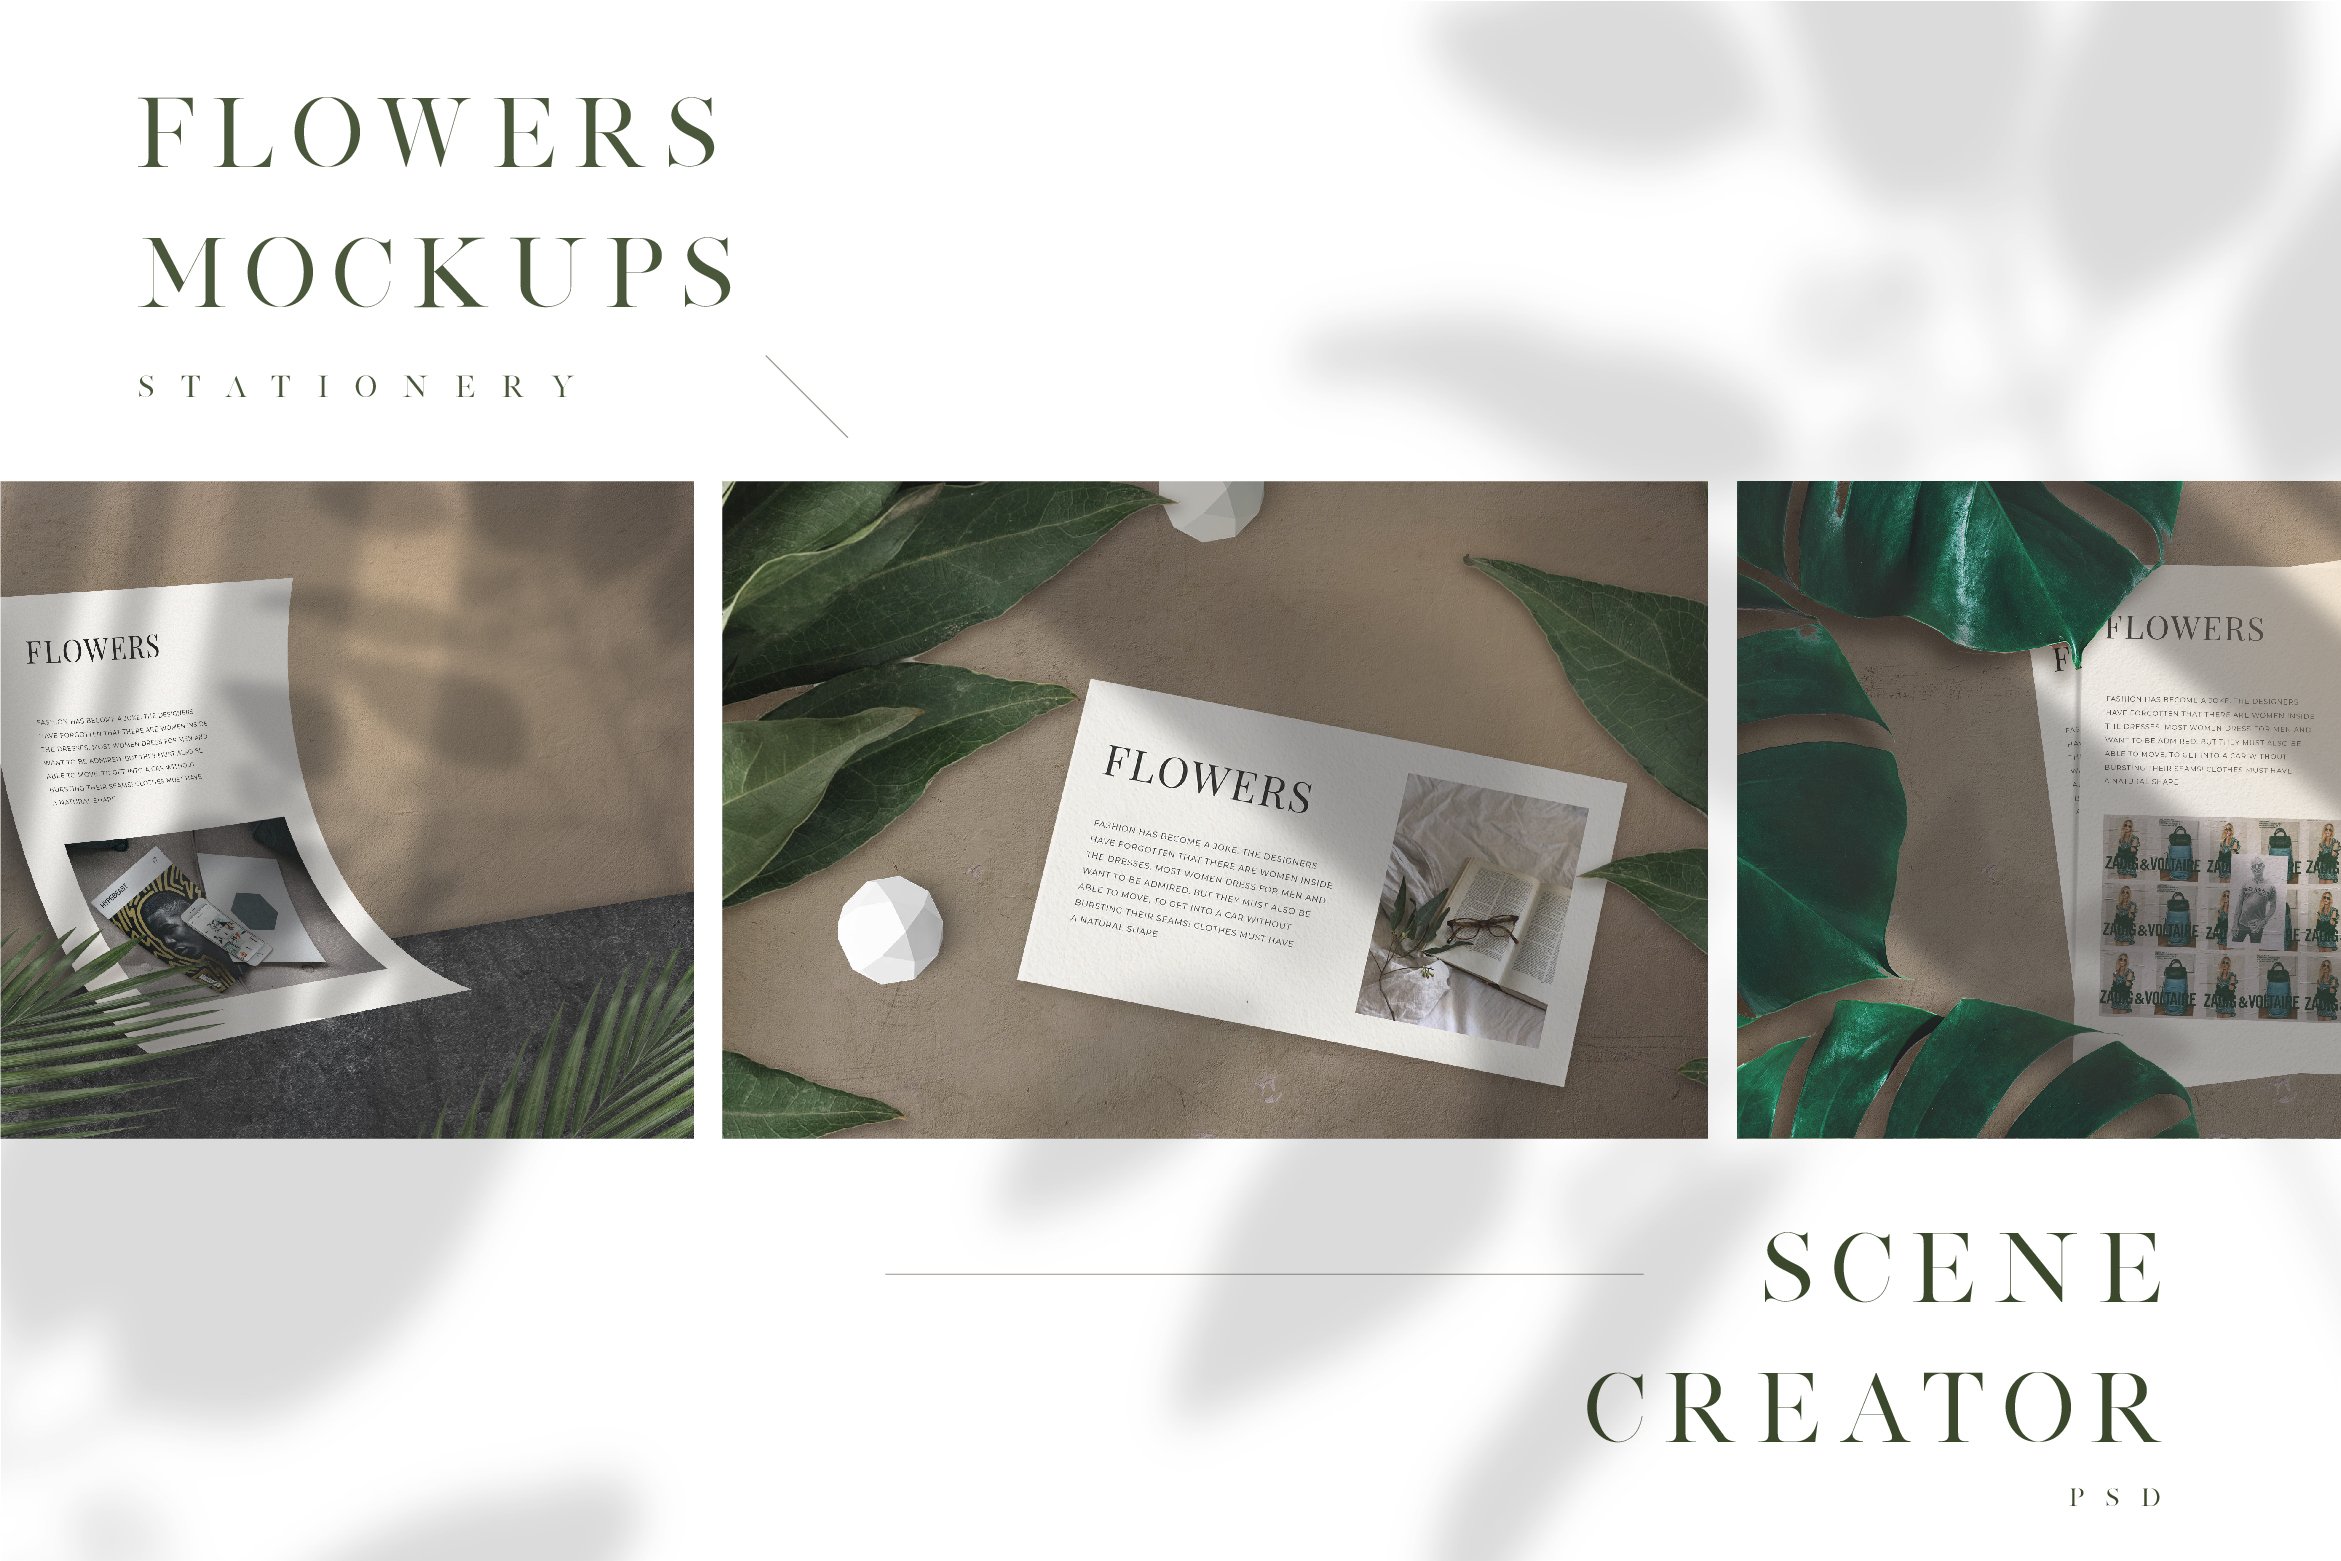 Flowers - (Mockup kit) Scene Creator cover image.